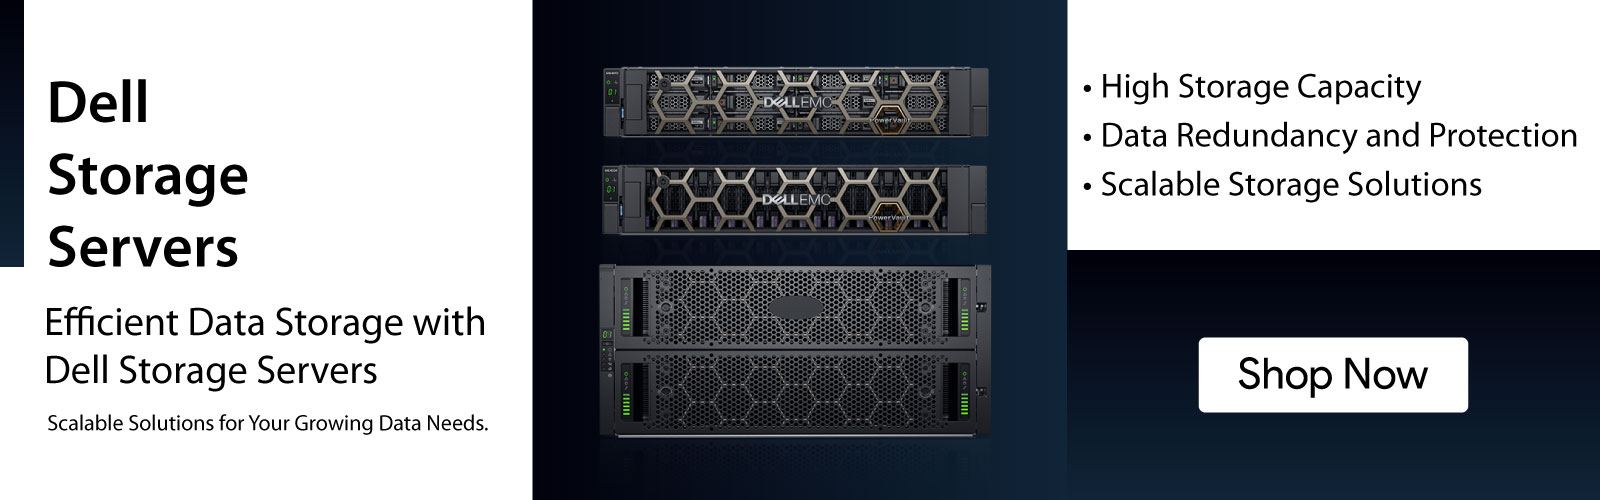 Dell-Storage-Servers